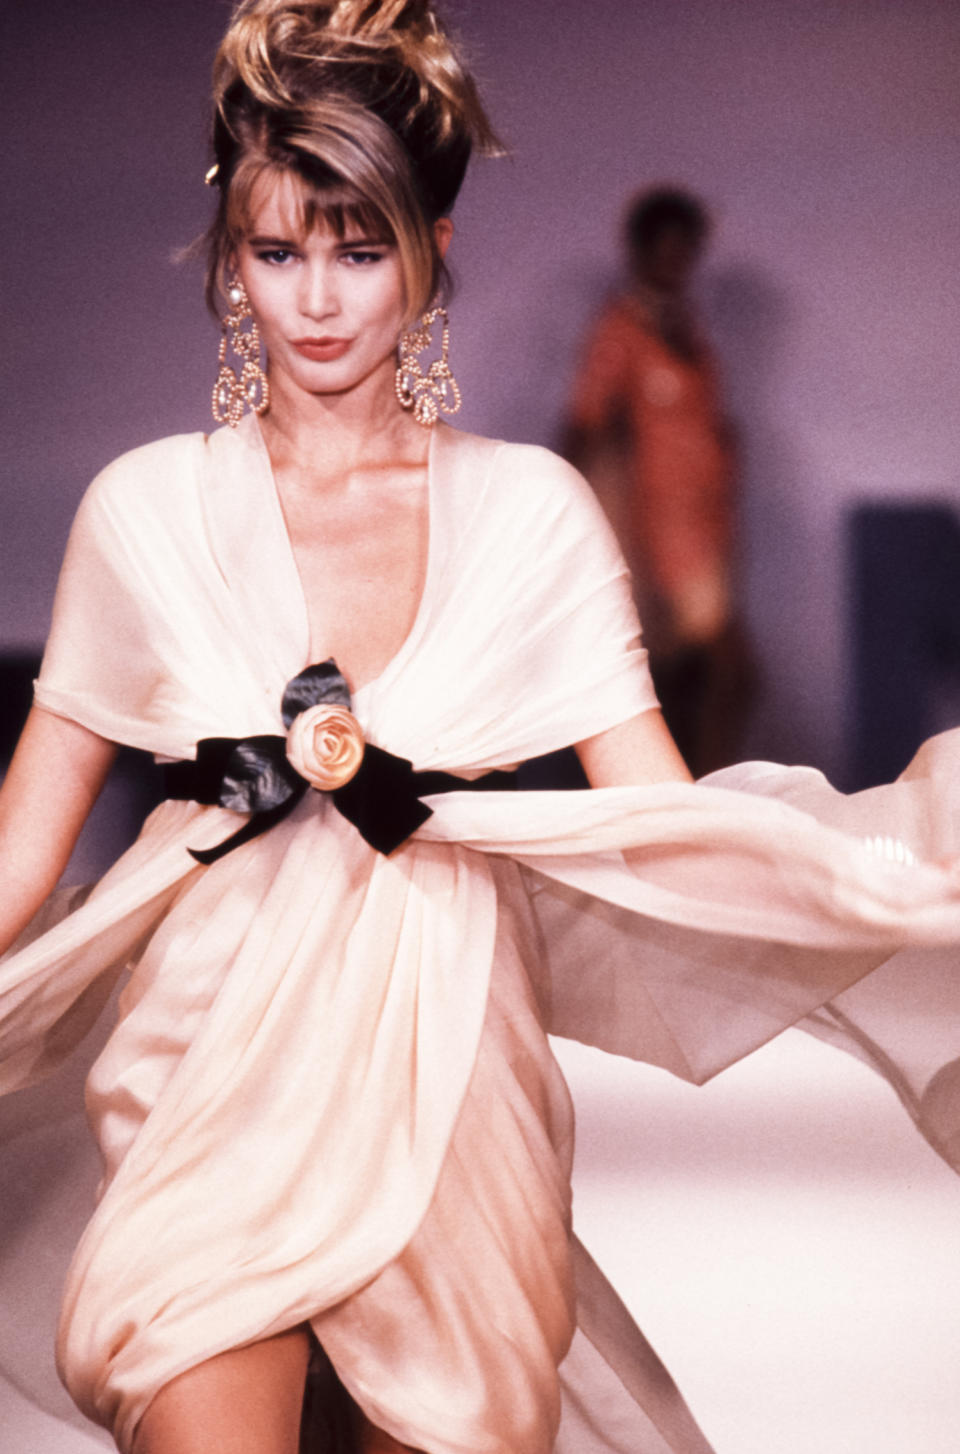 Supermodel Claudia Schiffer in the late 1980s. (Photo:Victor Virgile/Gamma-Rapho via Getty Images)